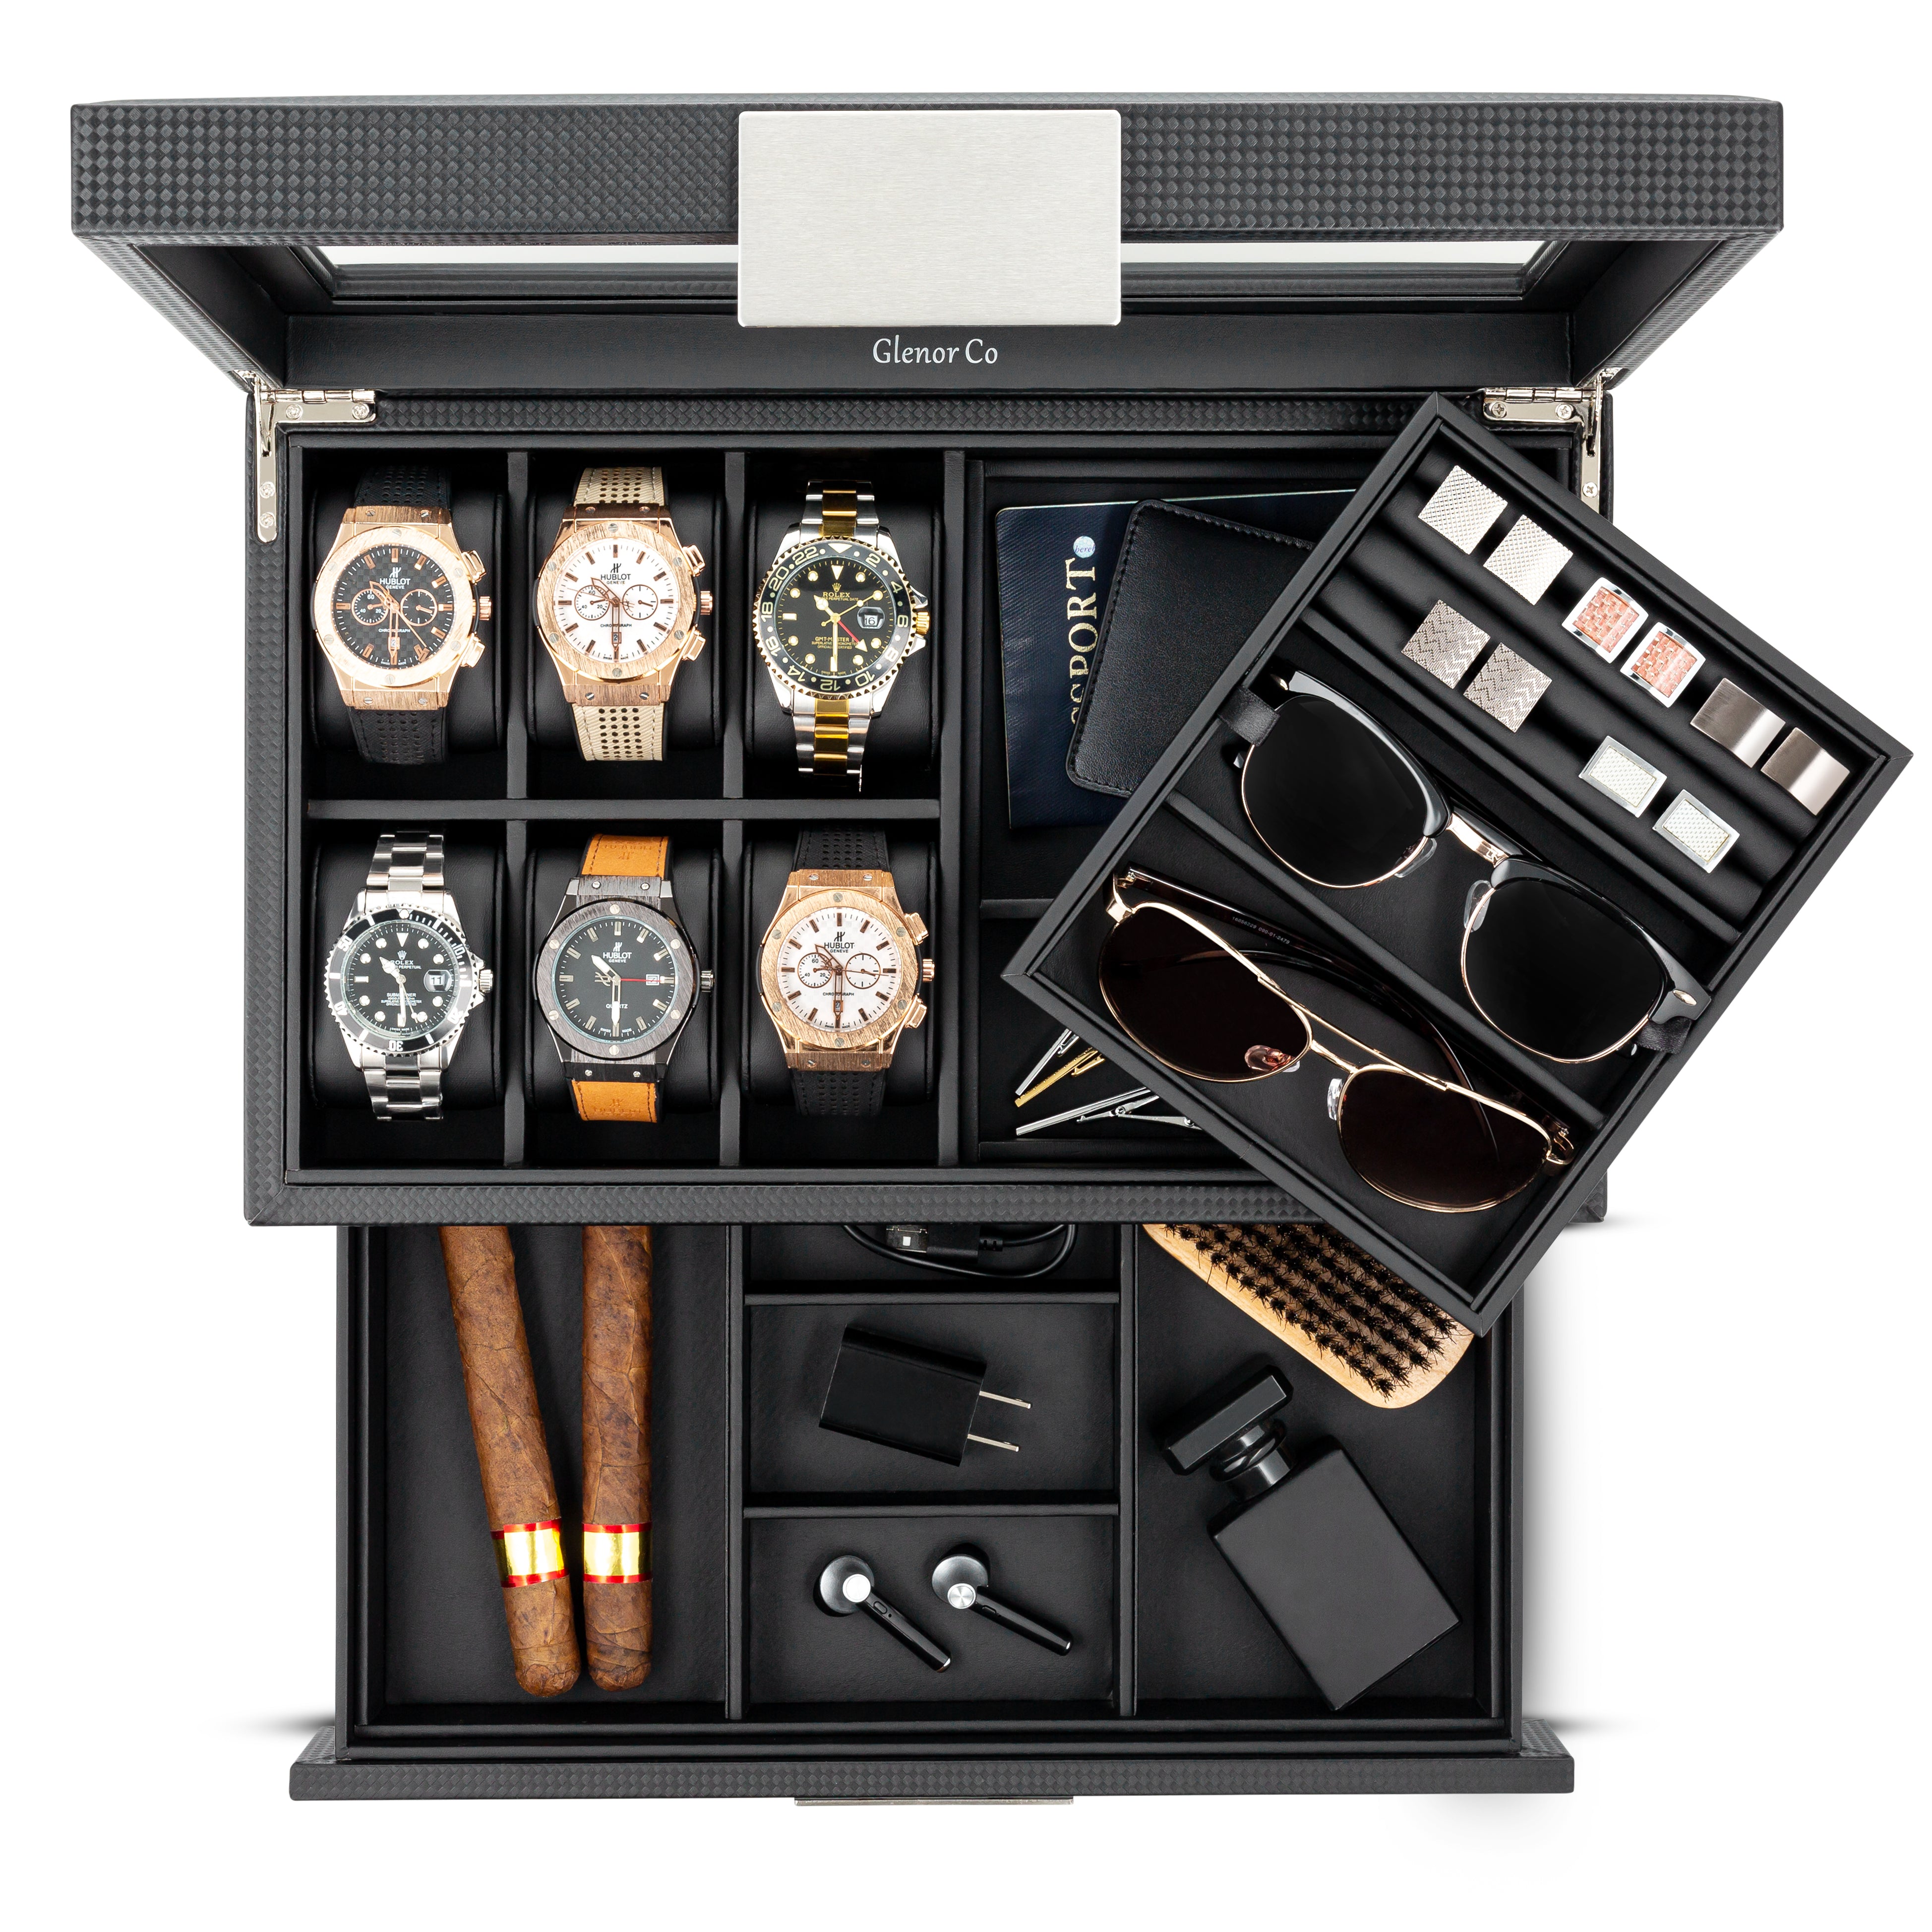 Valet Jewelry Box - Holds 6 Watches, 12 cufflinks, 2 Sunglasses, Drawer & Tray Storage